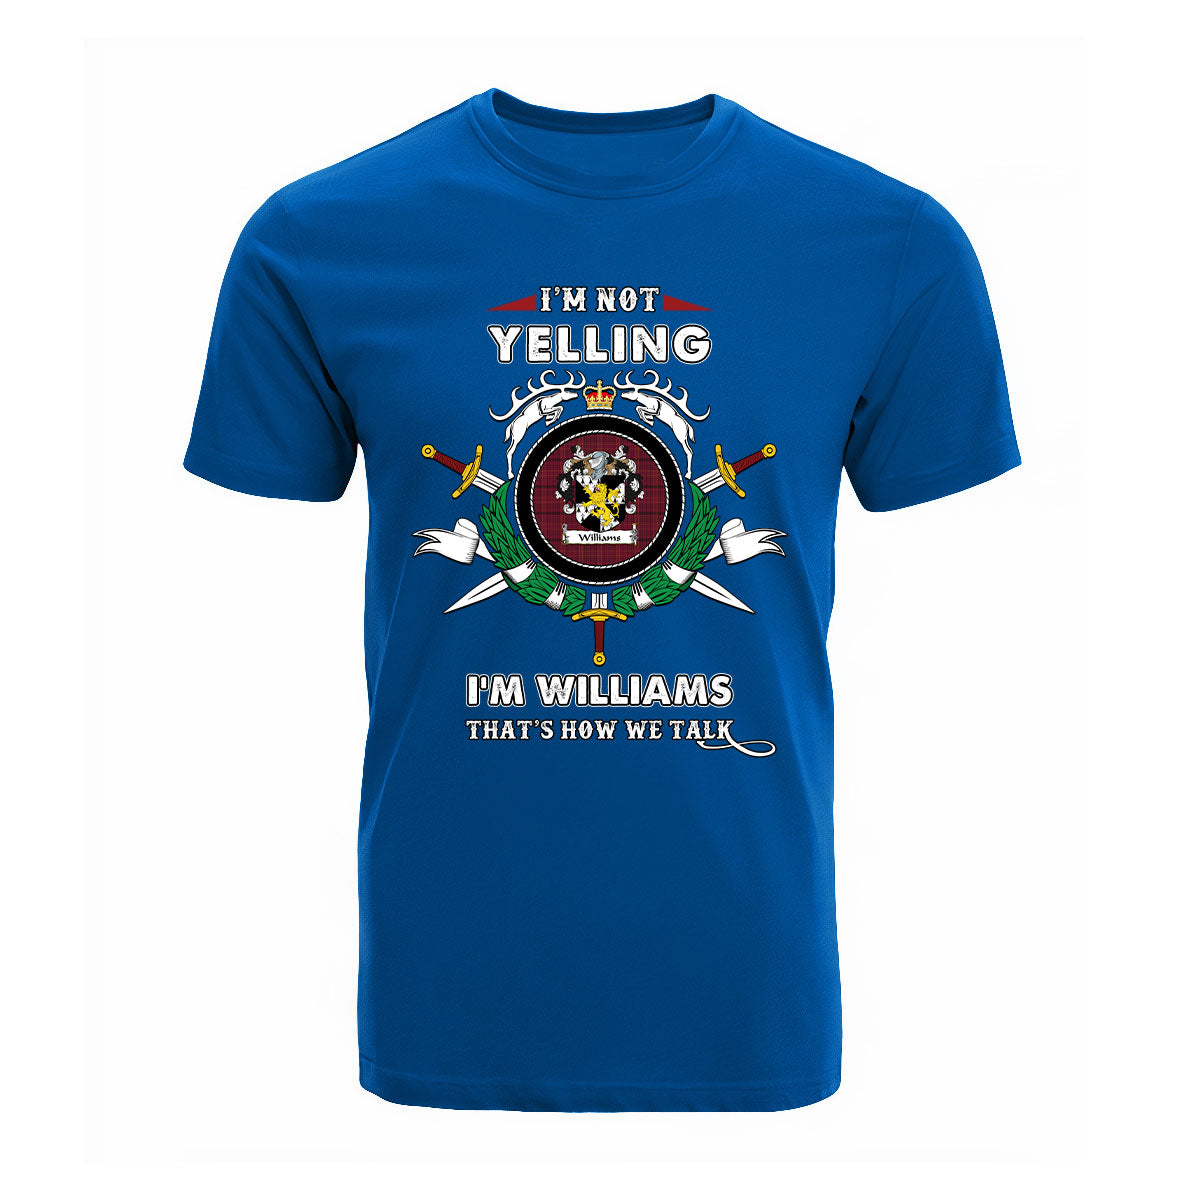 Williams Tartan Crest T-shirt - I'm not yelling style